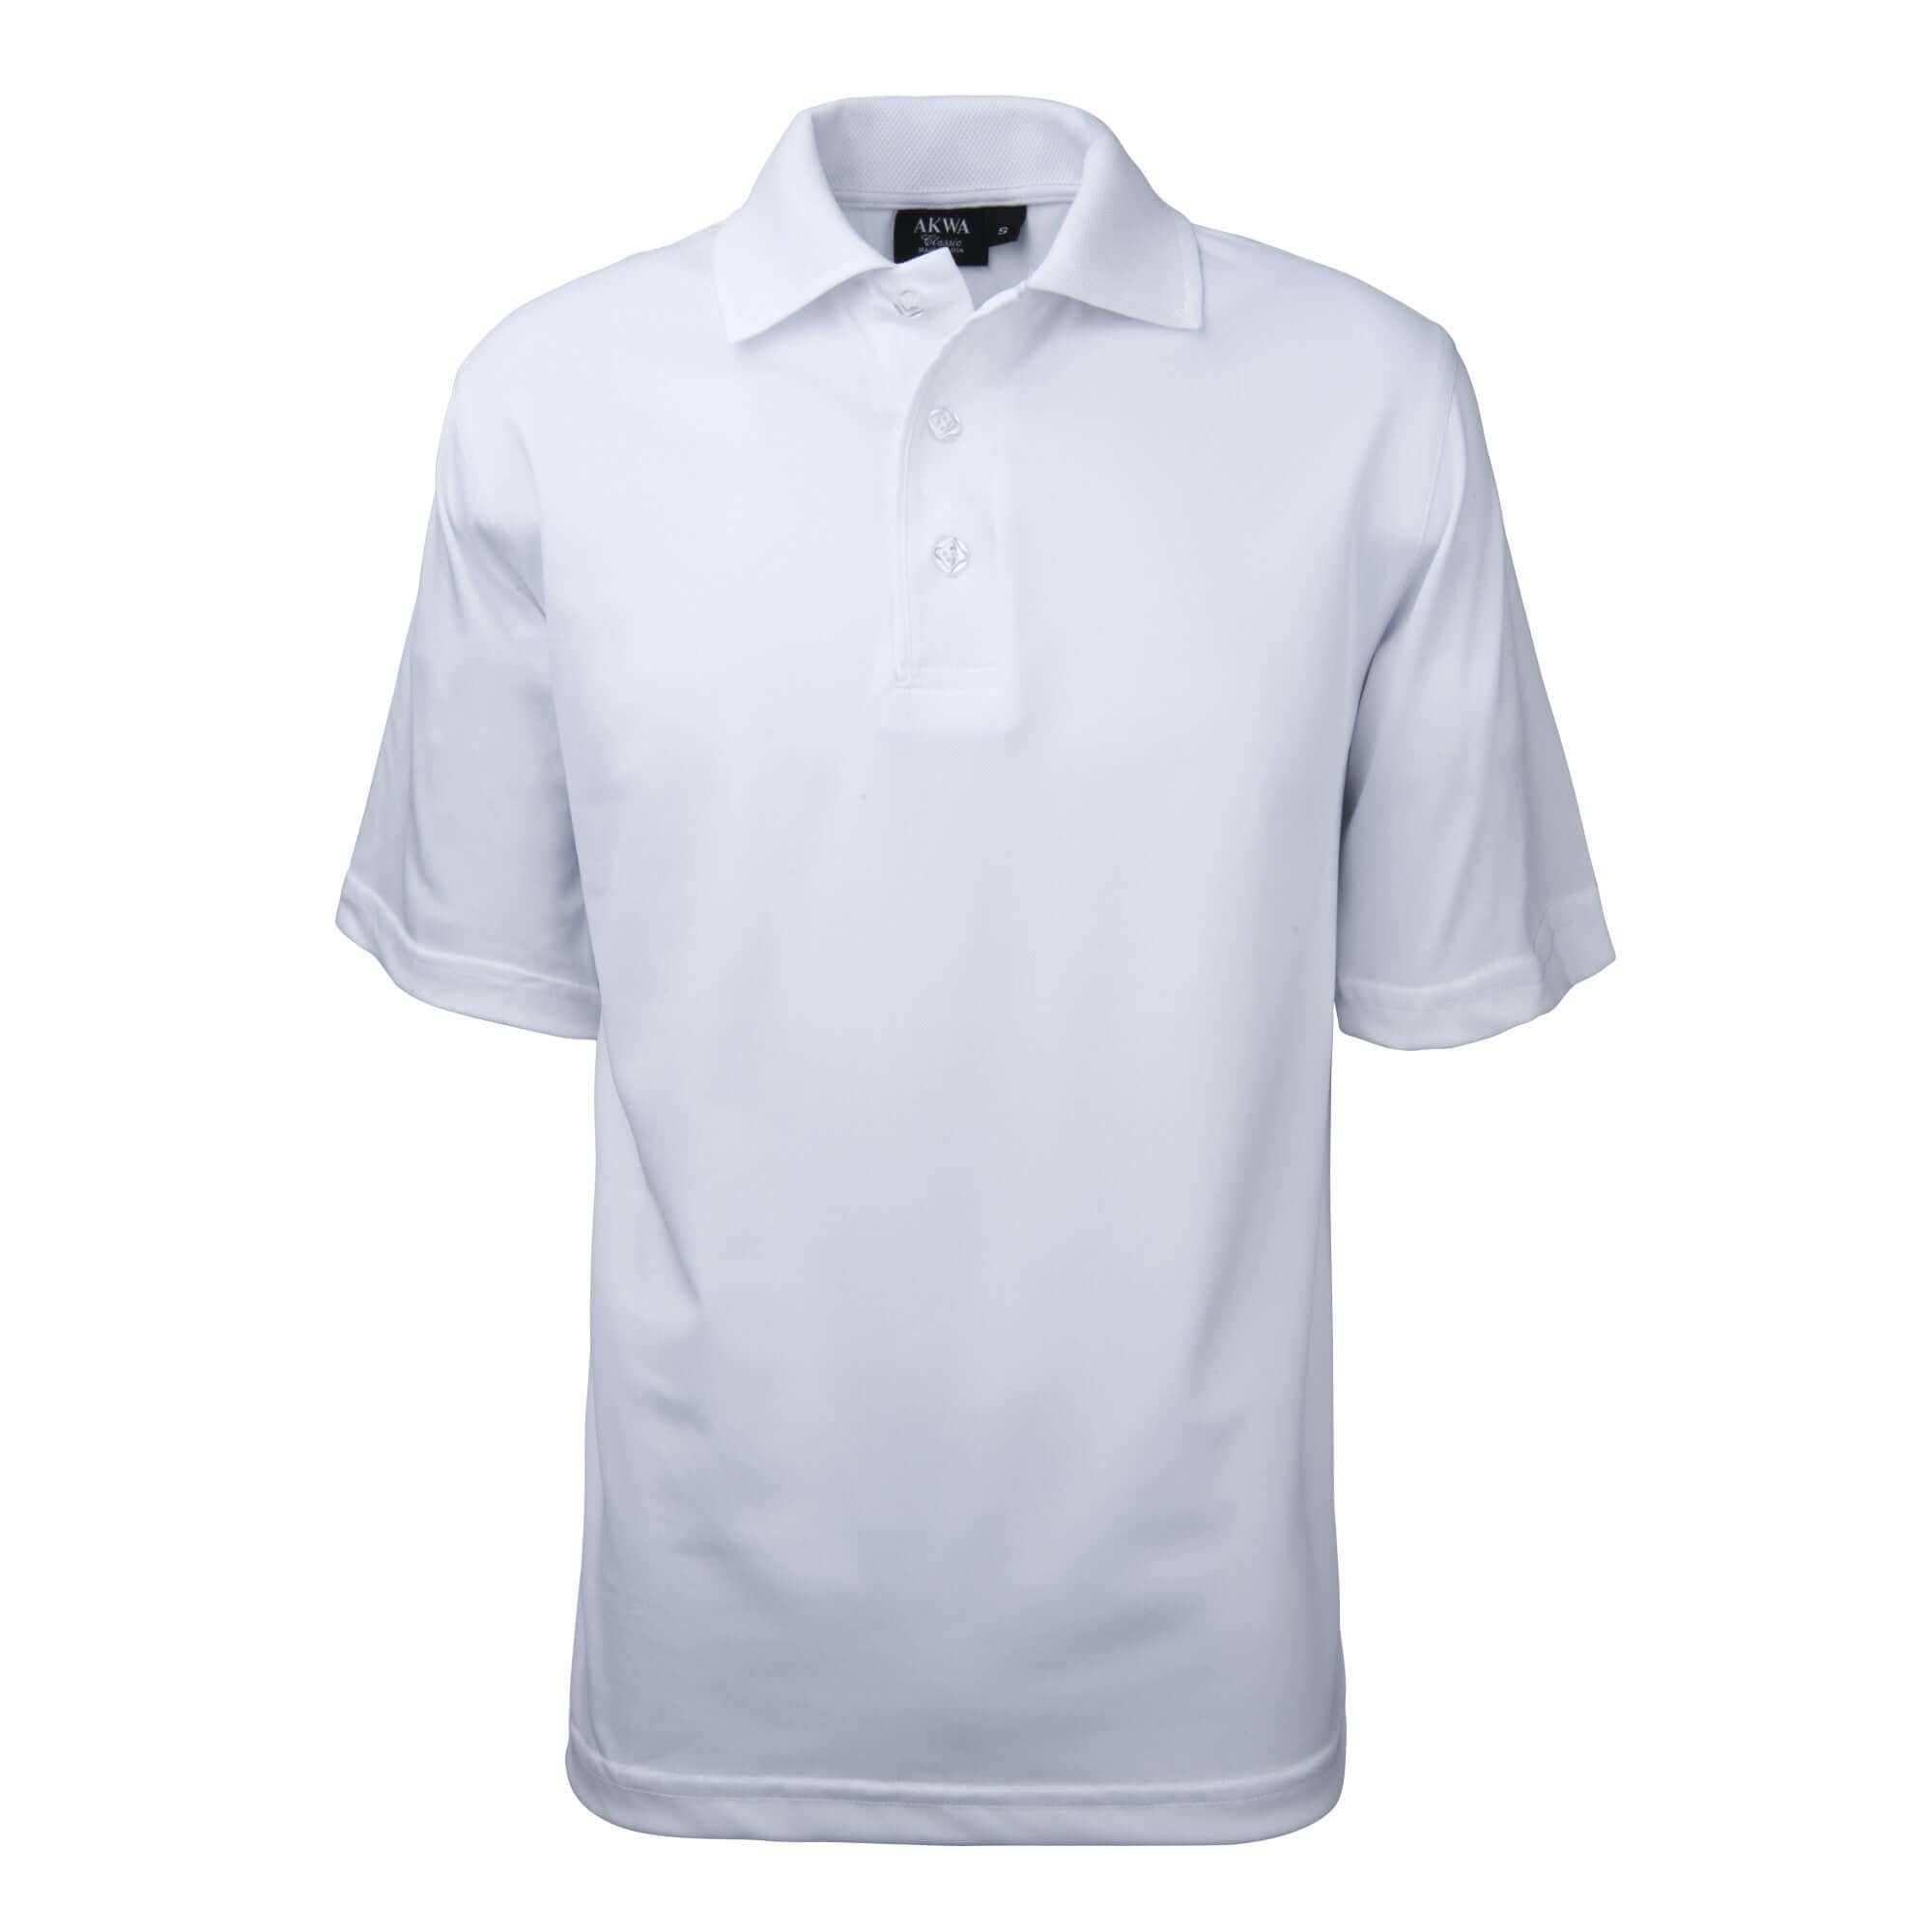 Men's Made in USA Tech Polo Shirt color_white - the flag shirt